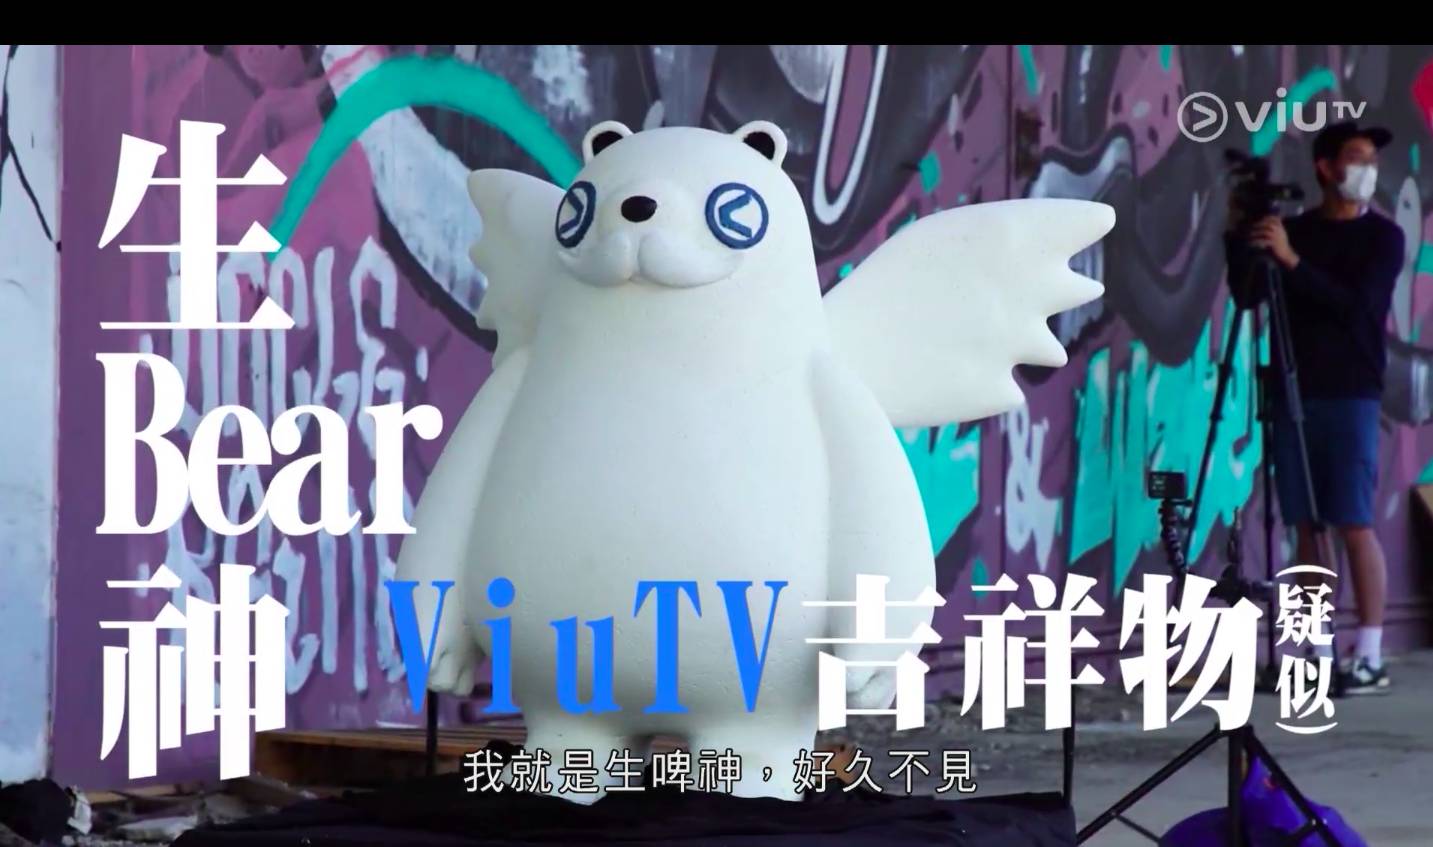 ERROR自肥企画 ViuTV吉祥物Sound Bear變成「生Bear神」現身。